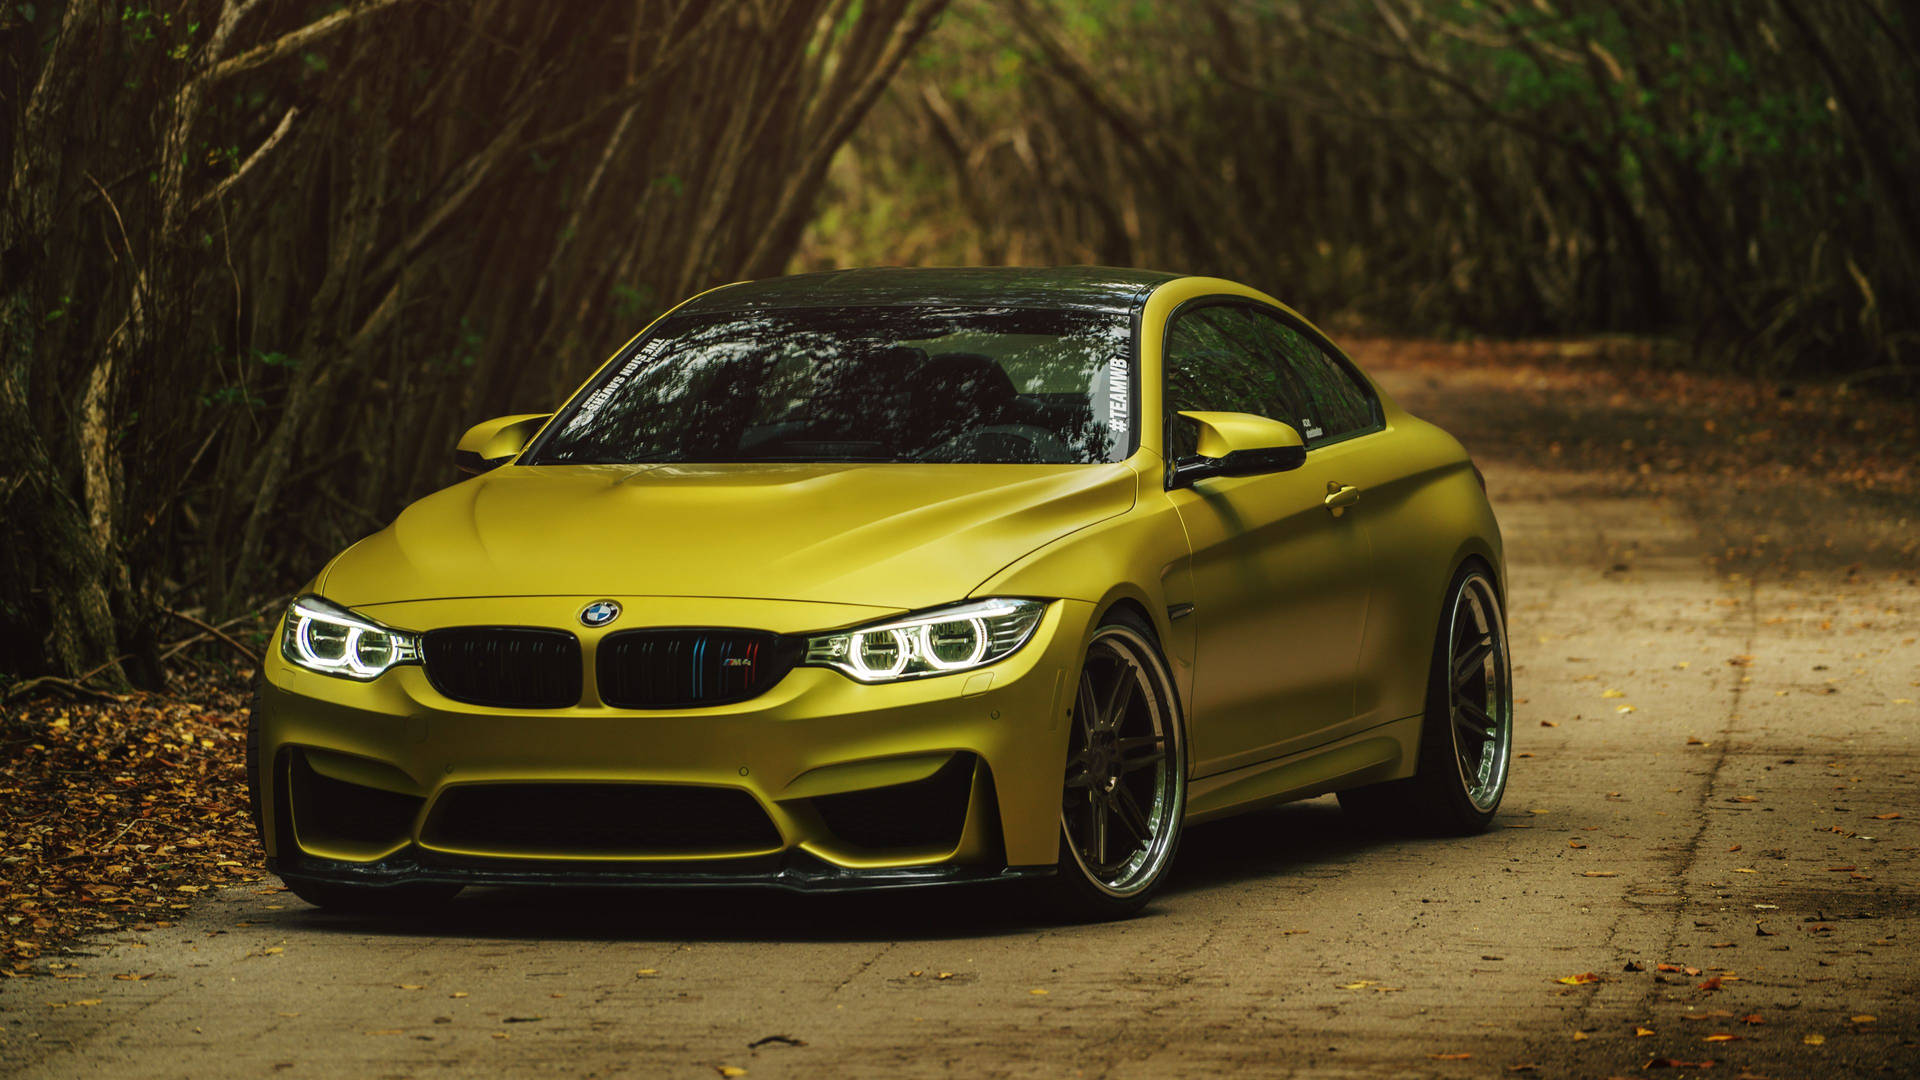 Striking Yellow BMW M Series in Action Wallpaper